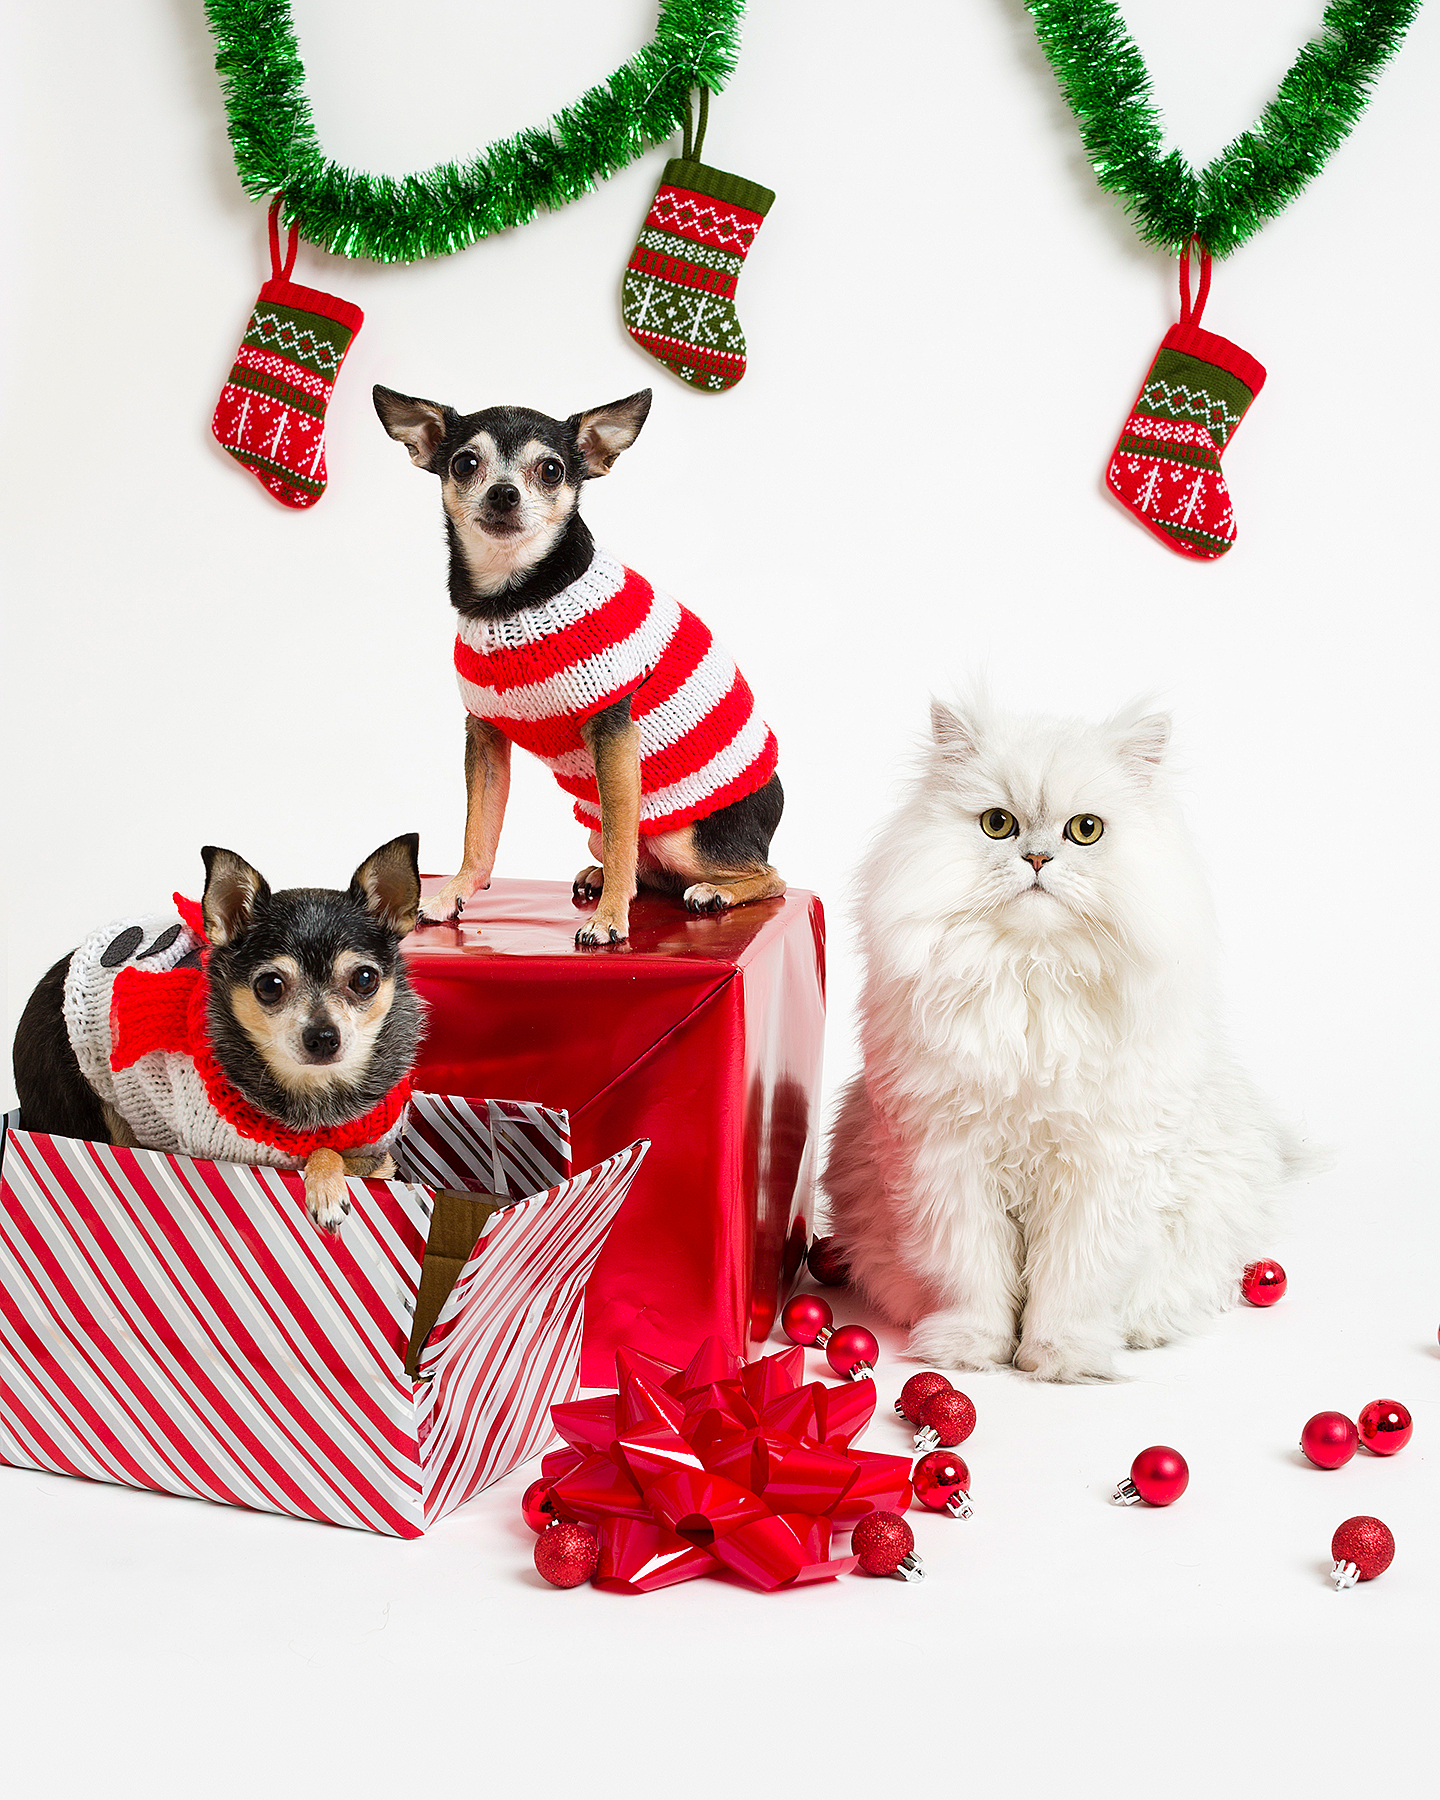 https://www.usmagazine.com/wp-content/uploads/2018/12/christmas-cat-dog-gifts.jpg?quality=40&strip=all